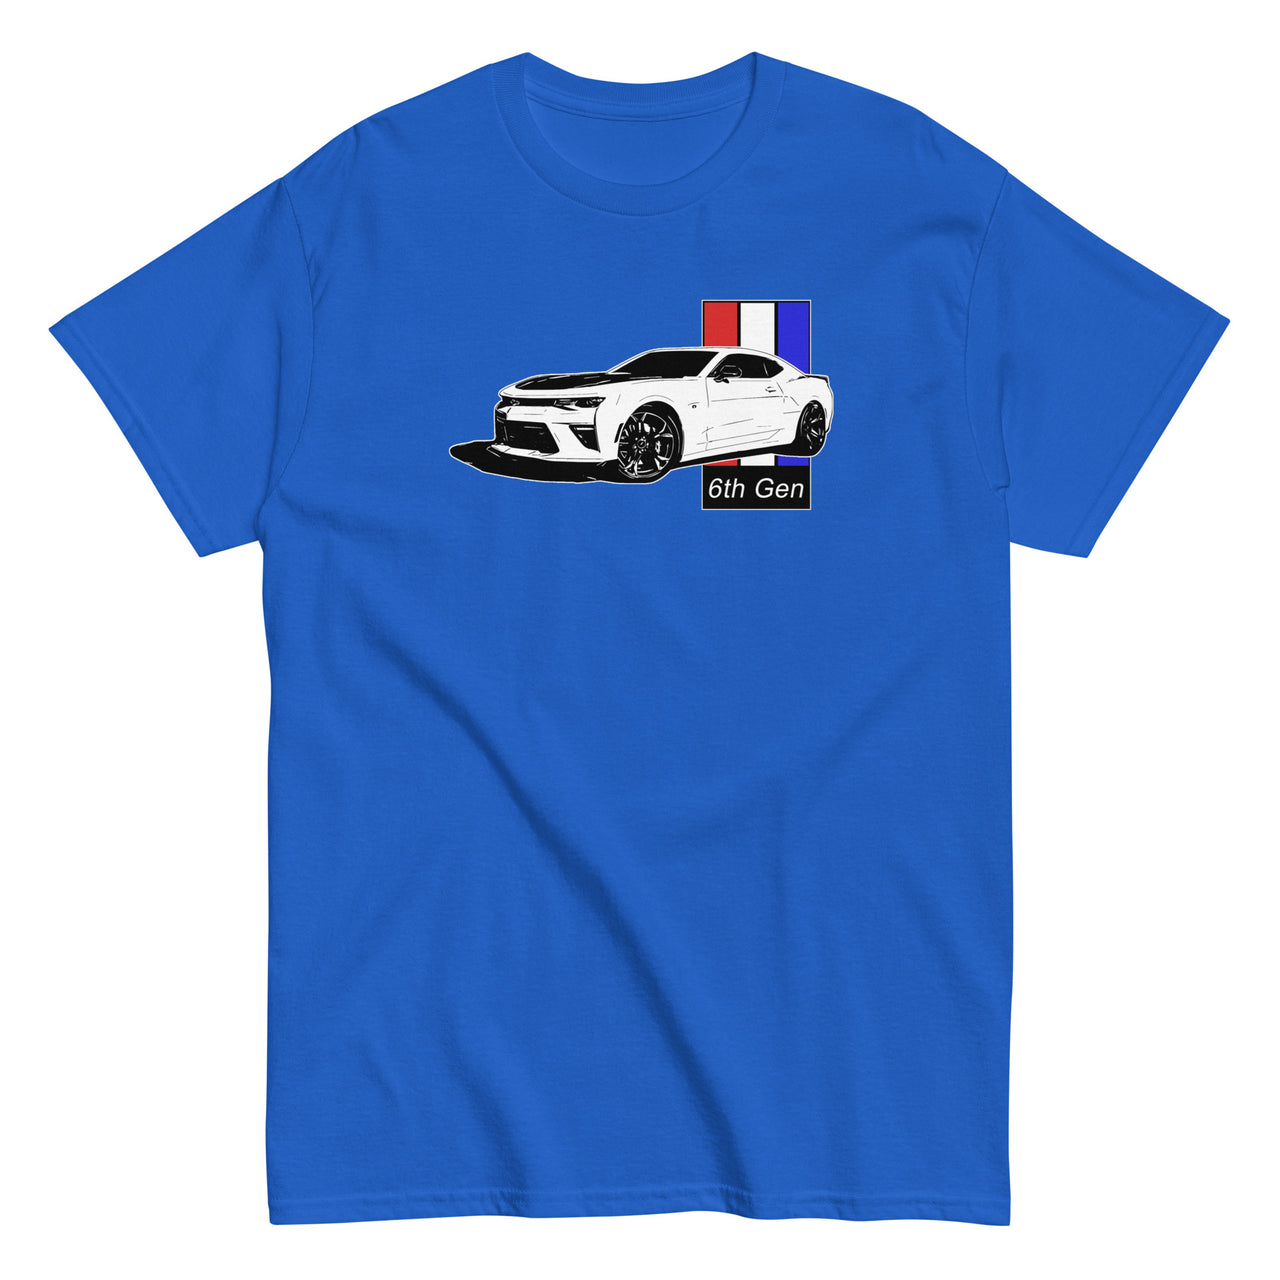 6th Gen Camaro T-Shirt in blue